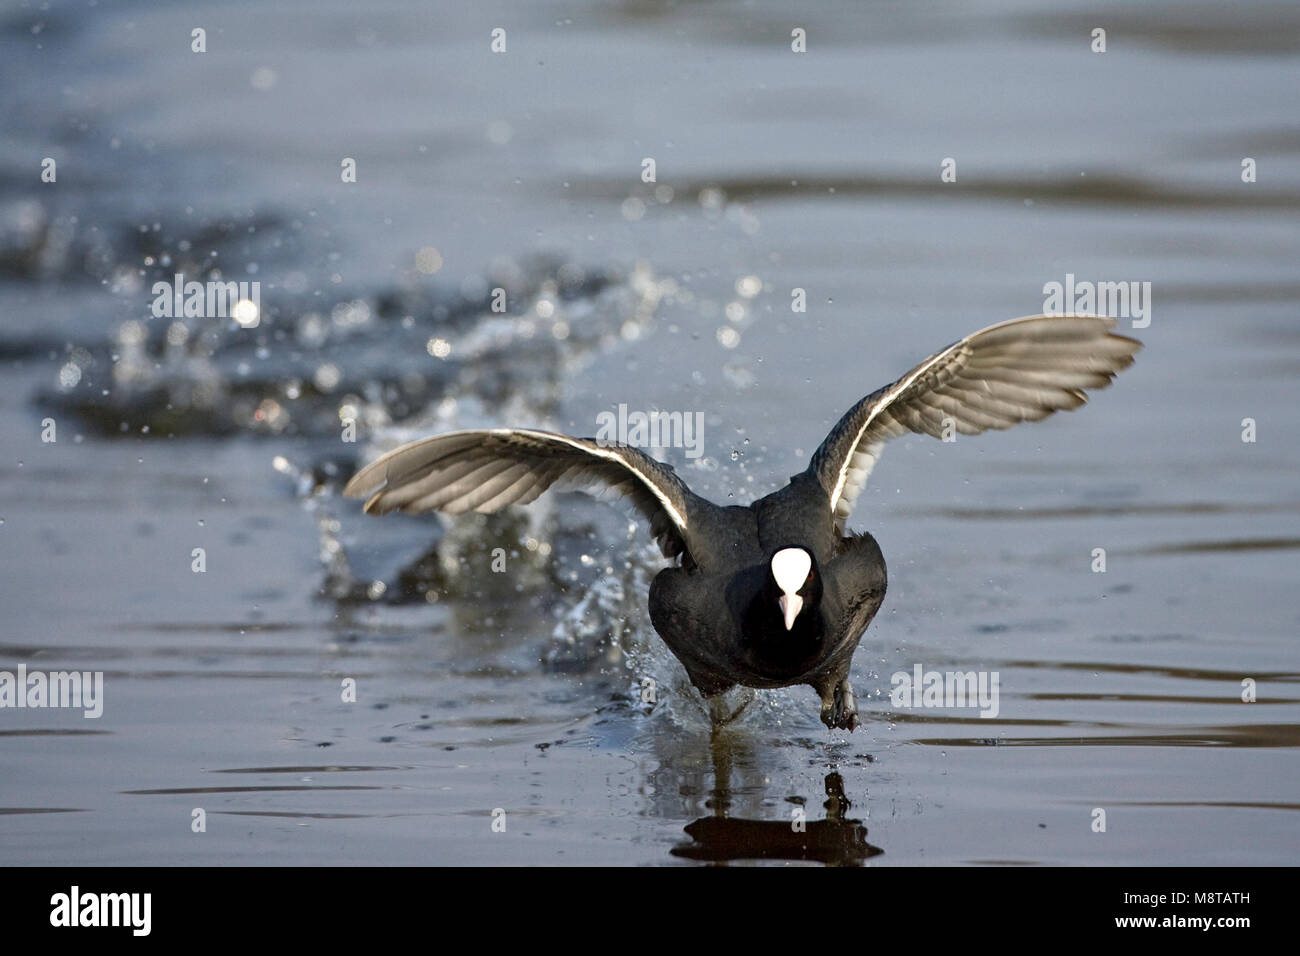 Meerkoet rennend über het water; Eurasian Coot laufen auf dem Wasser Stockfoto